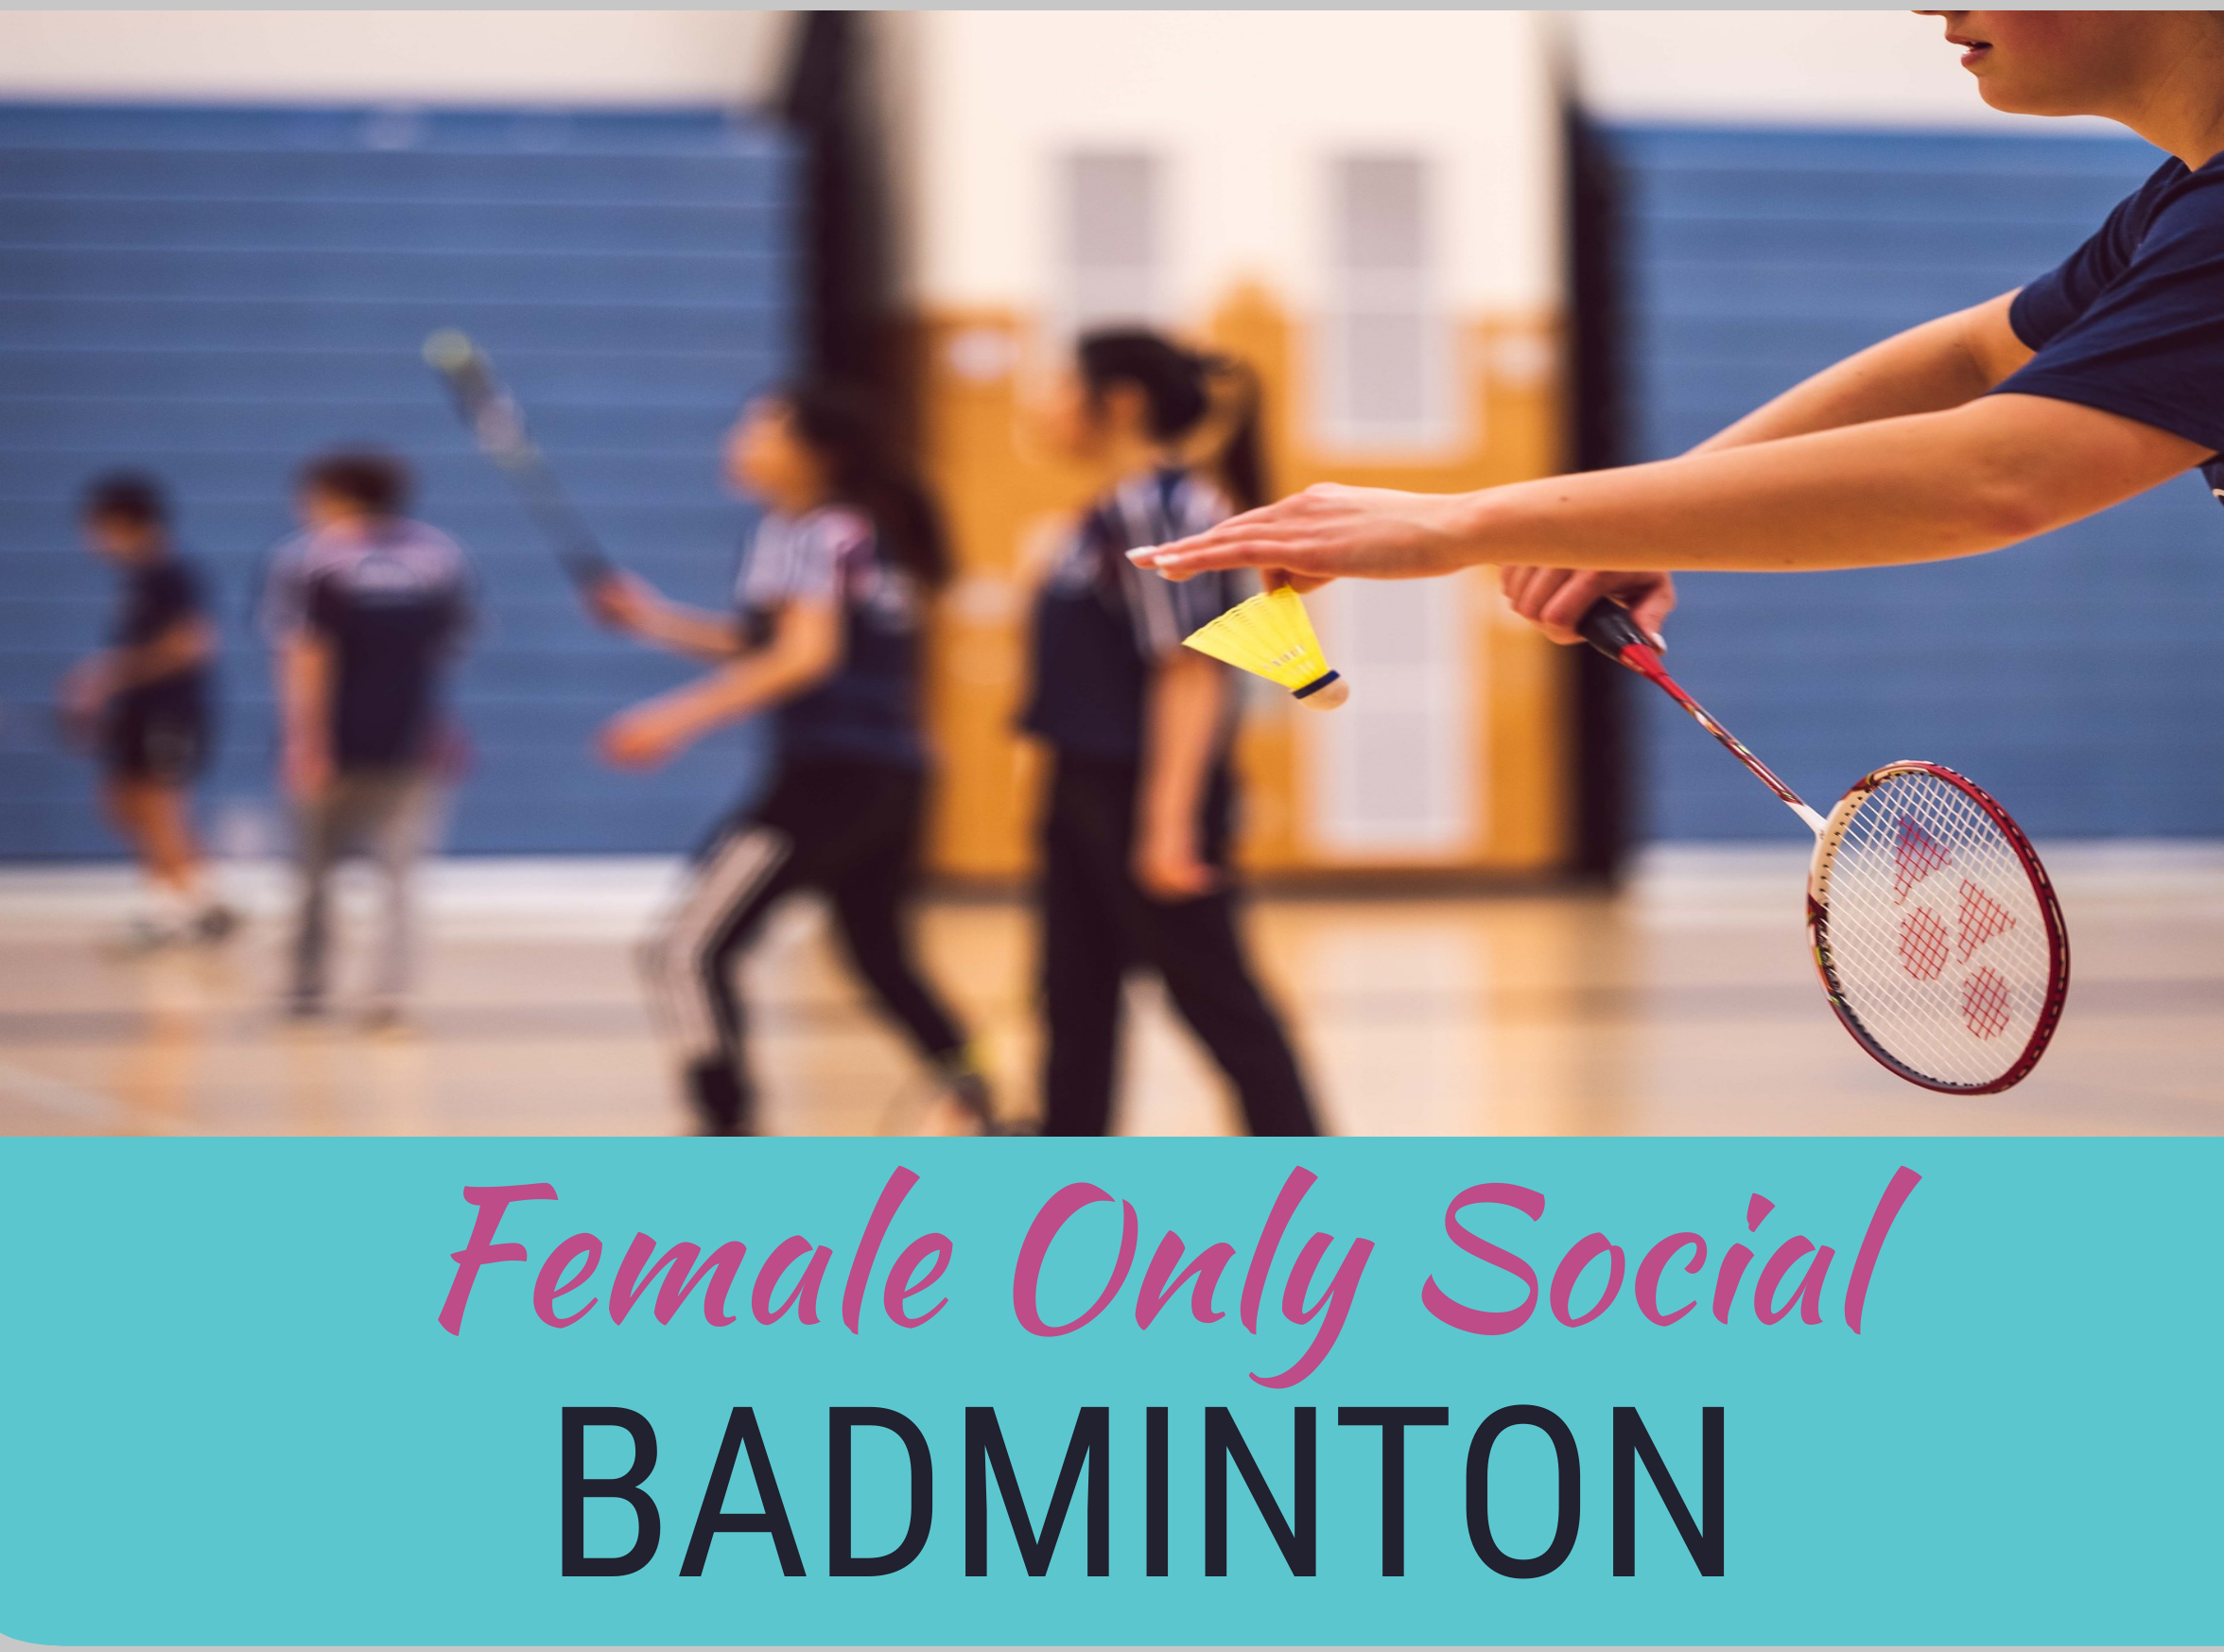 Lady playing badminton